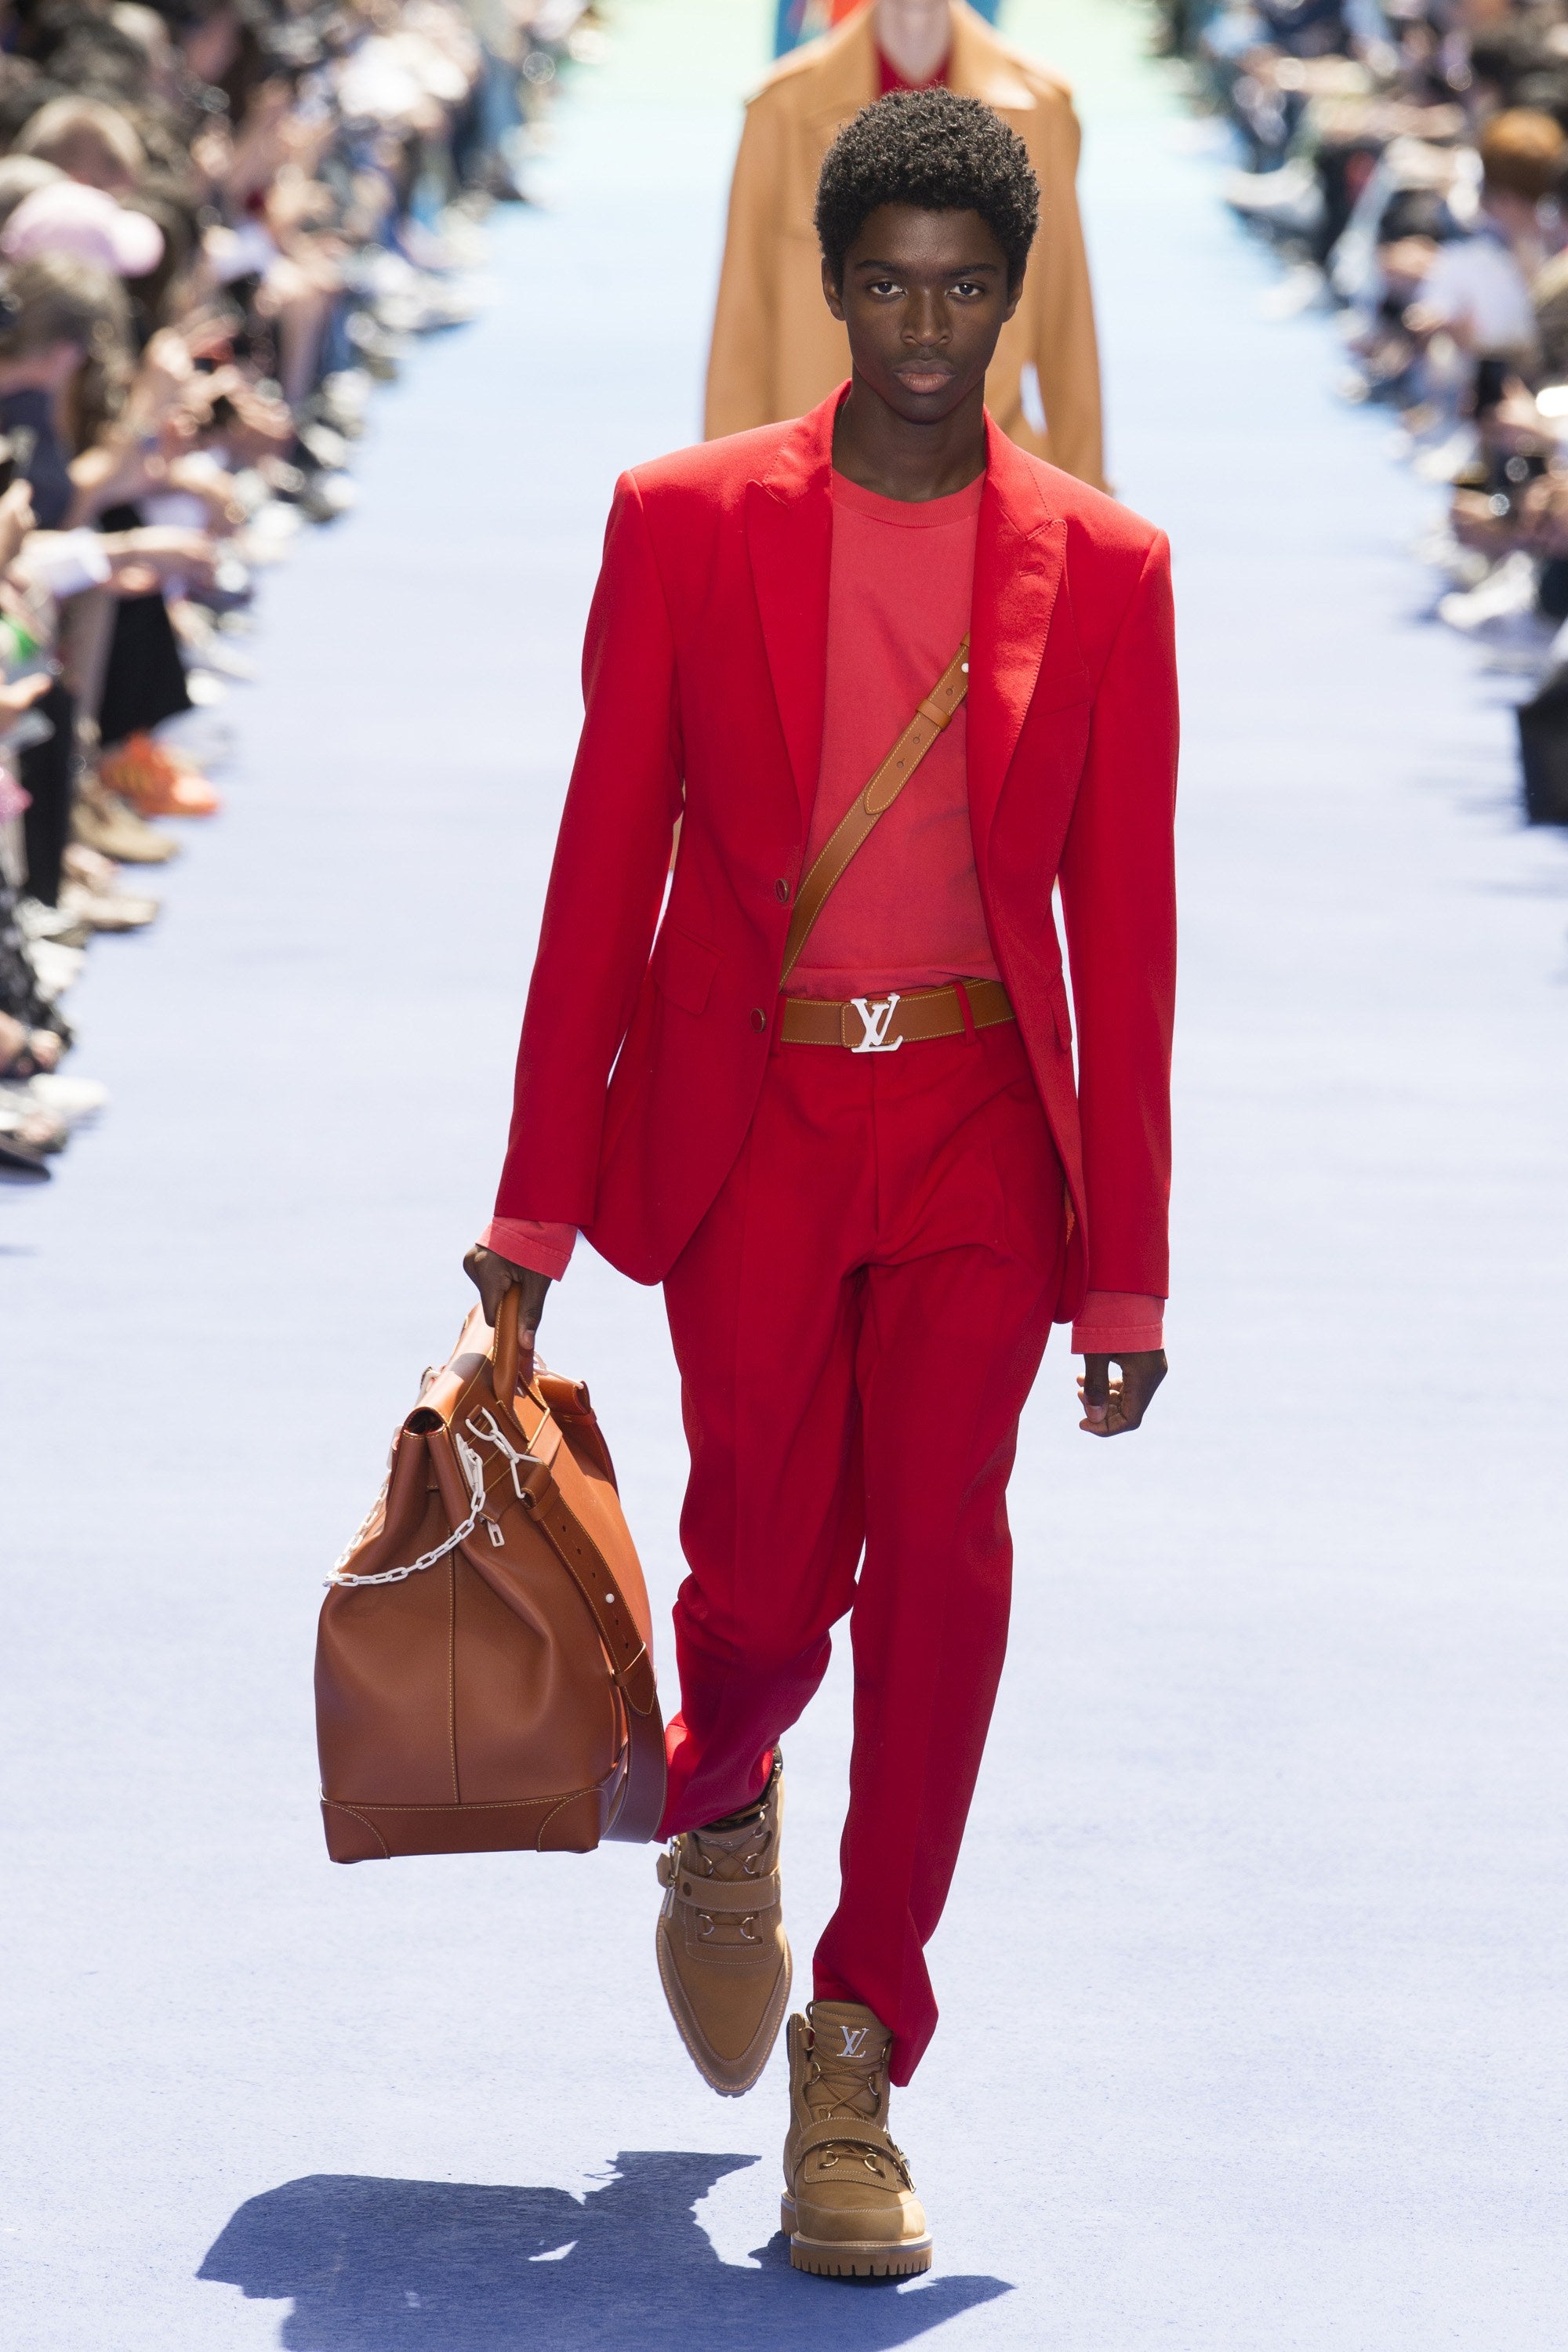 Louis Vuitton Bag Outfit Styles For Men